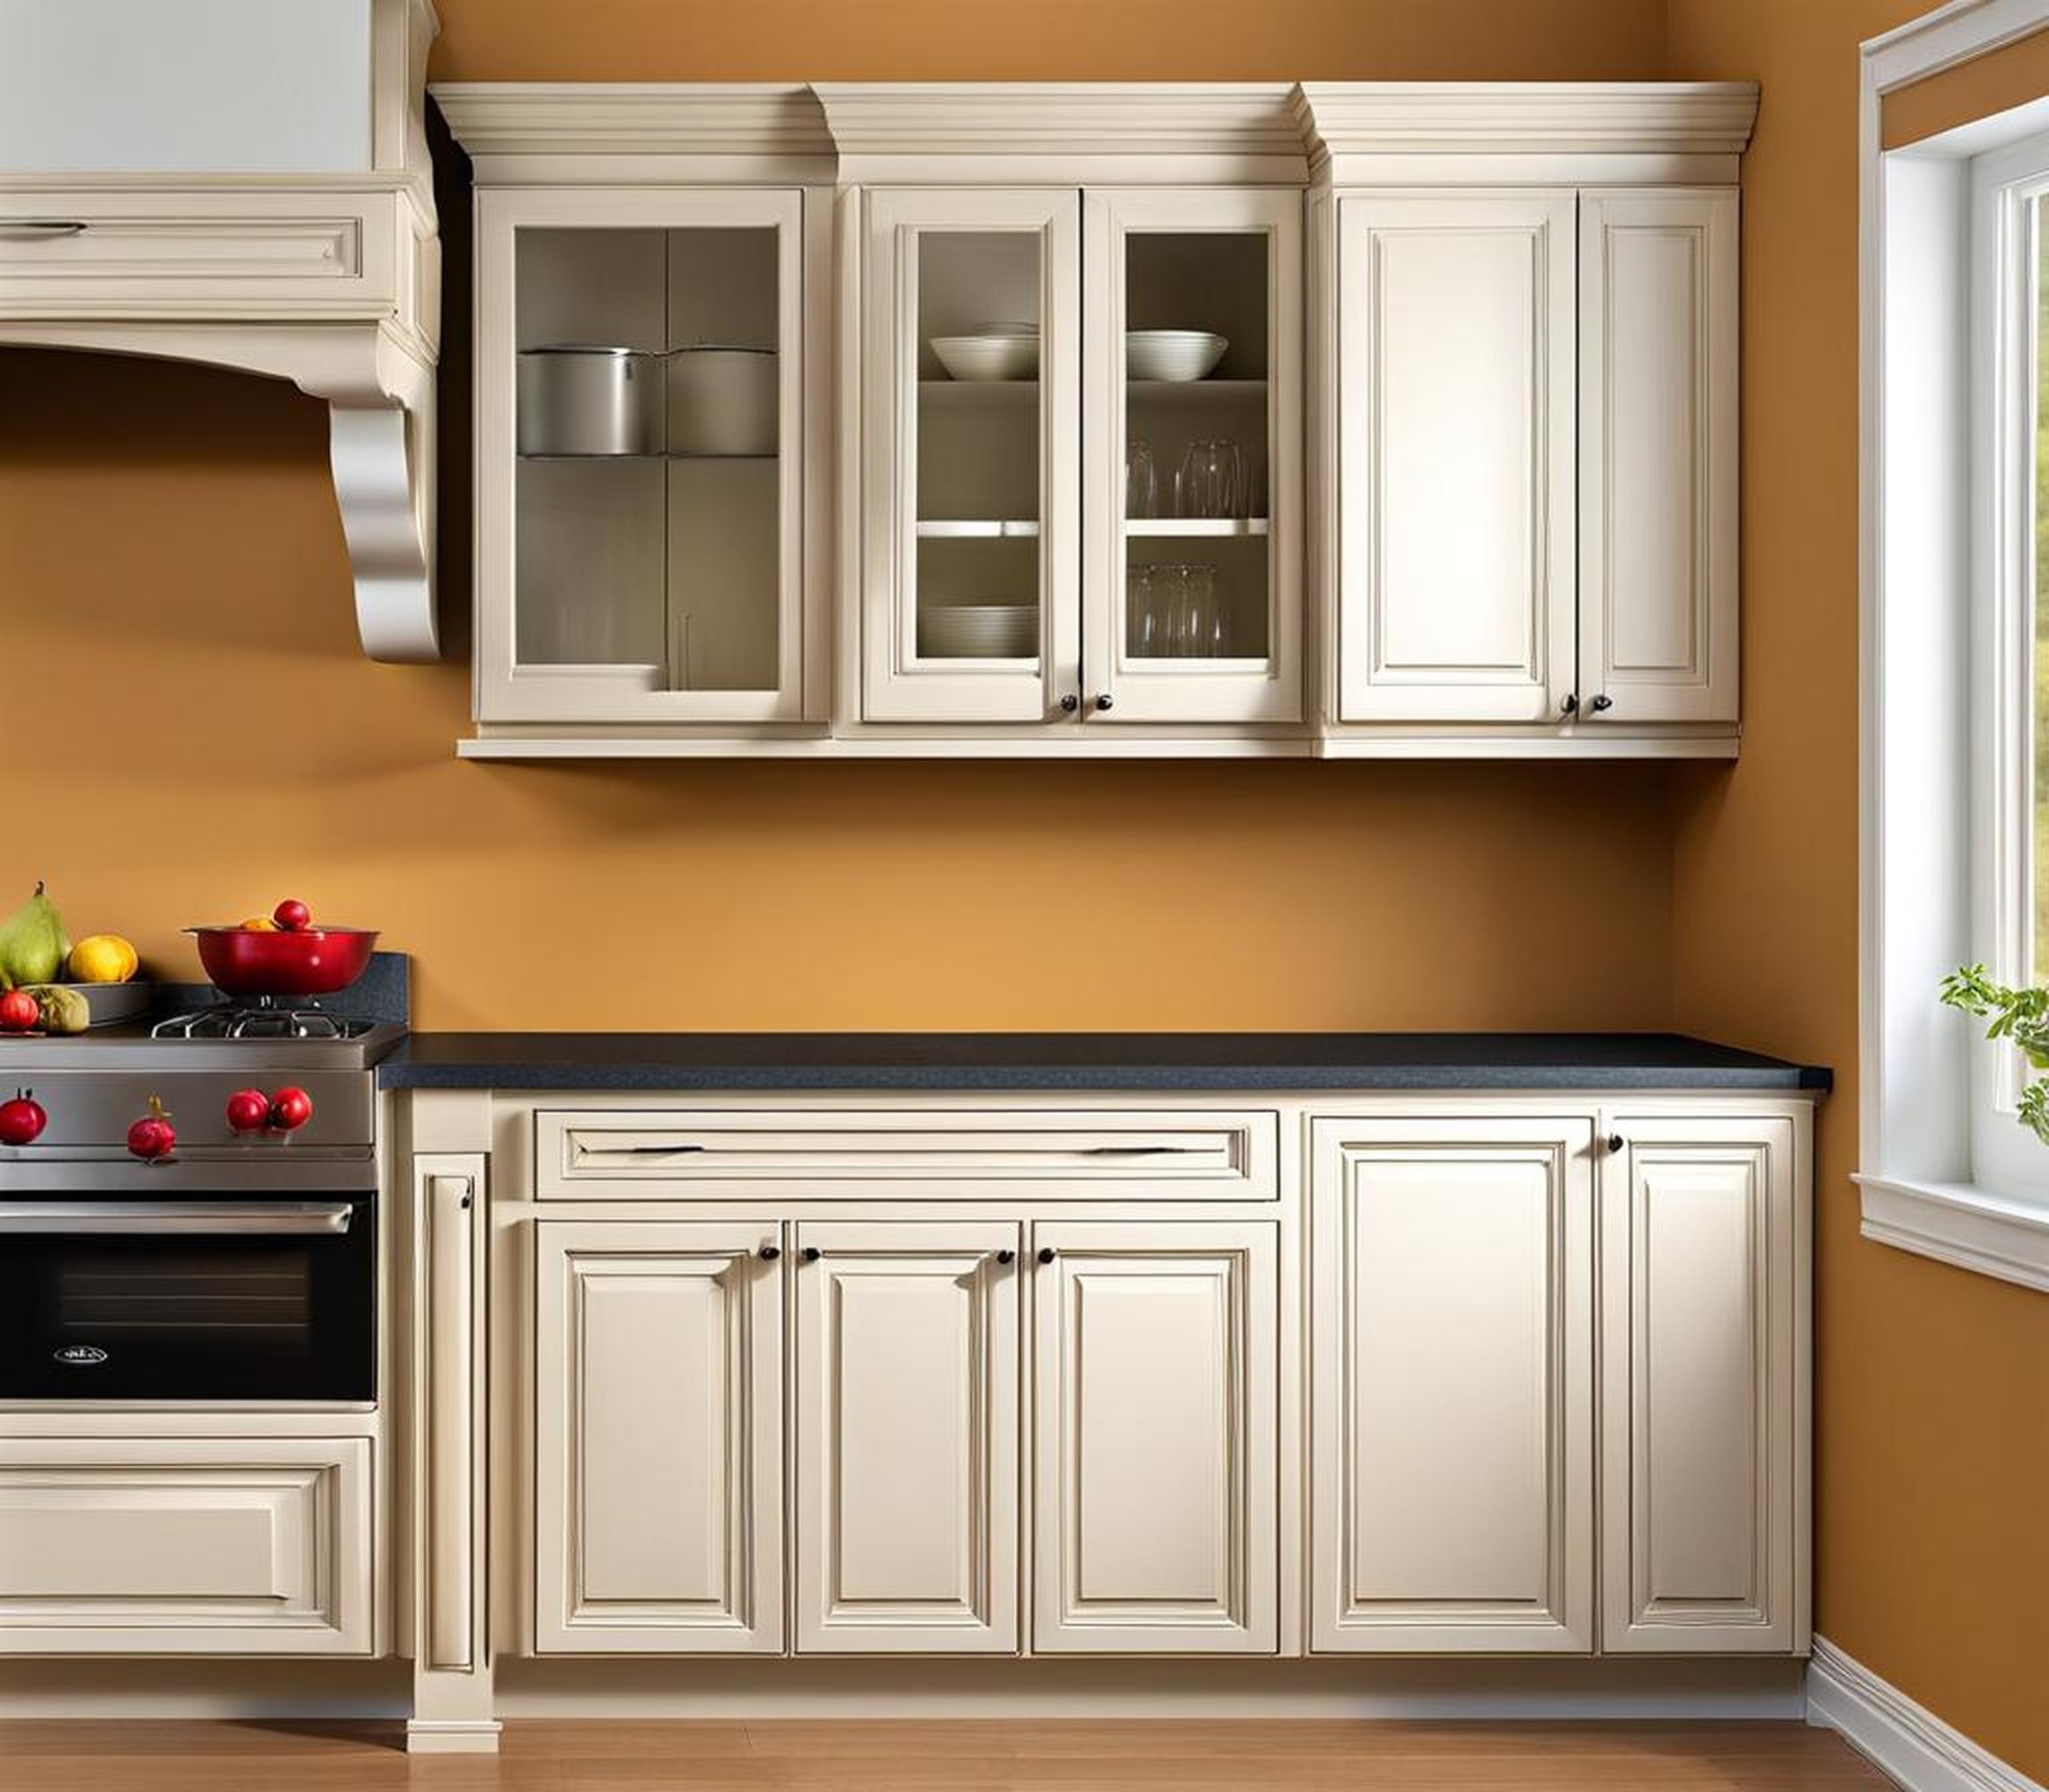 standard depth of kitchen cabinets